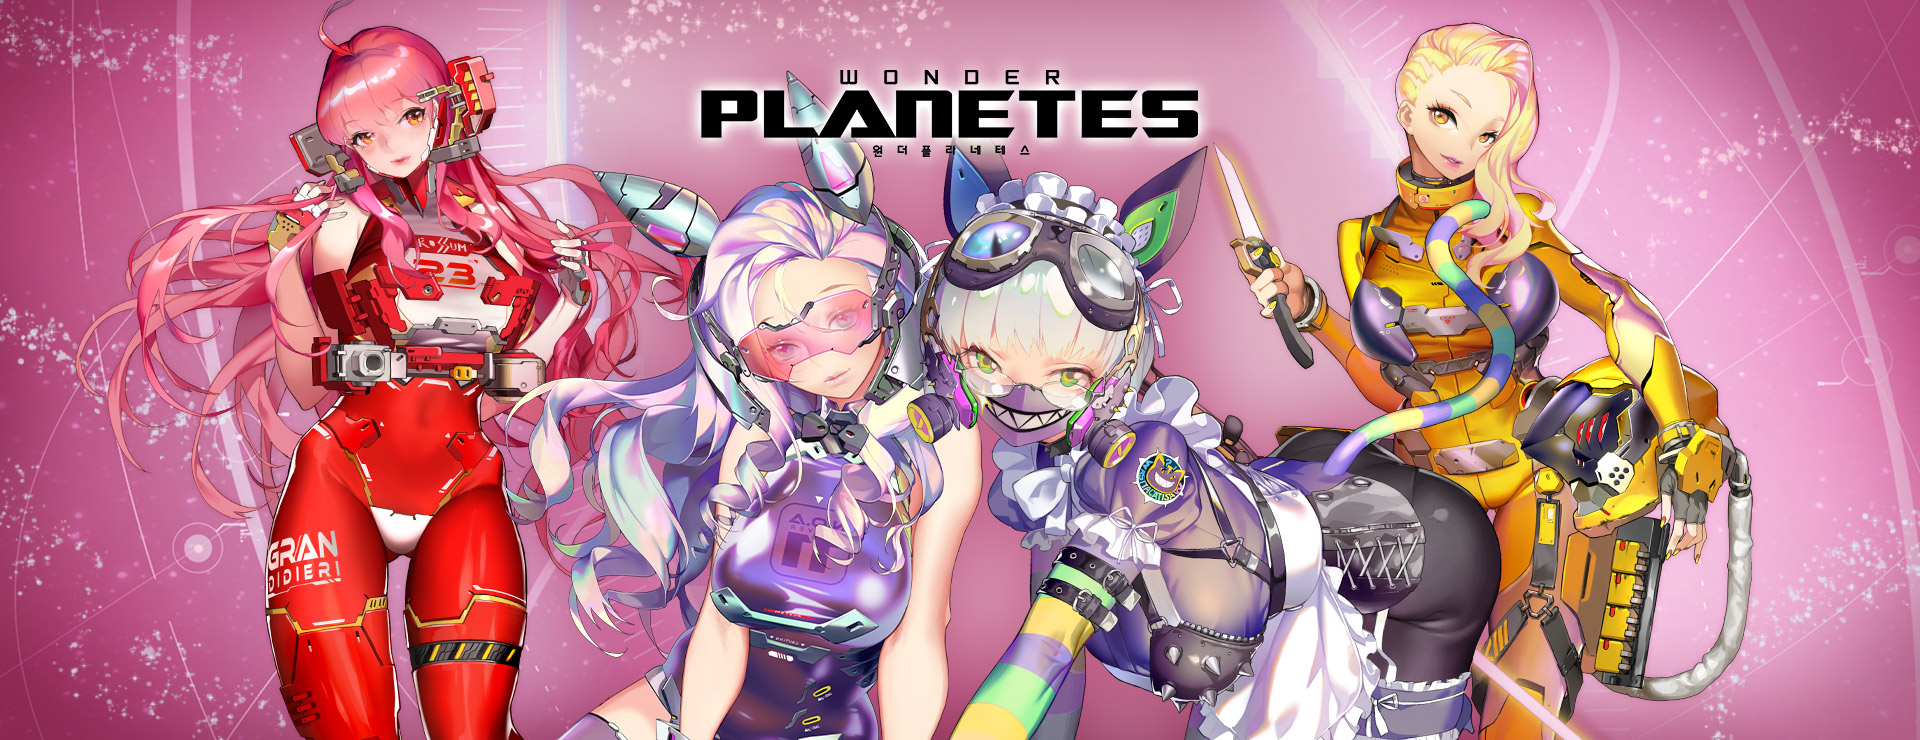 Wonder Planetes Game - Action Adventure Game